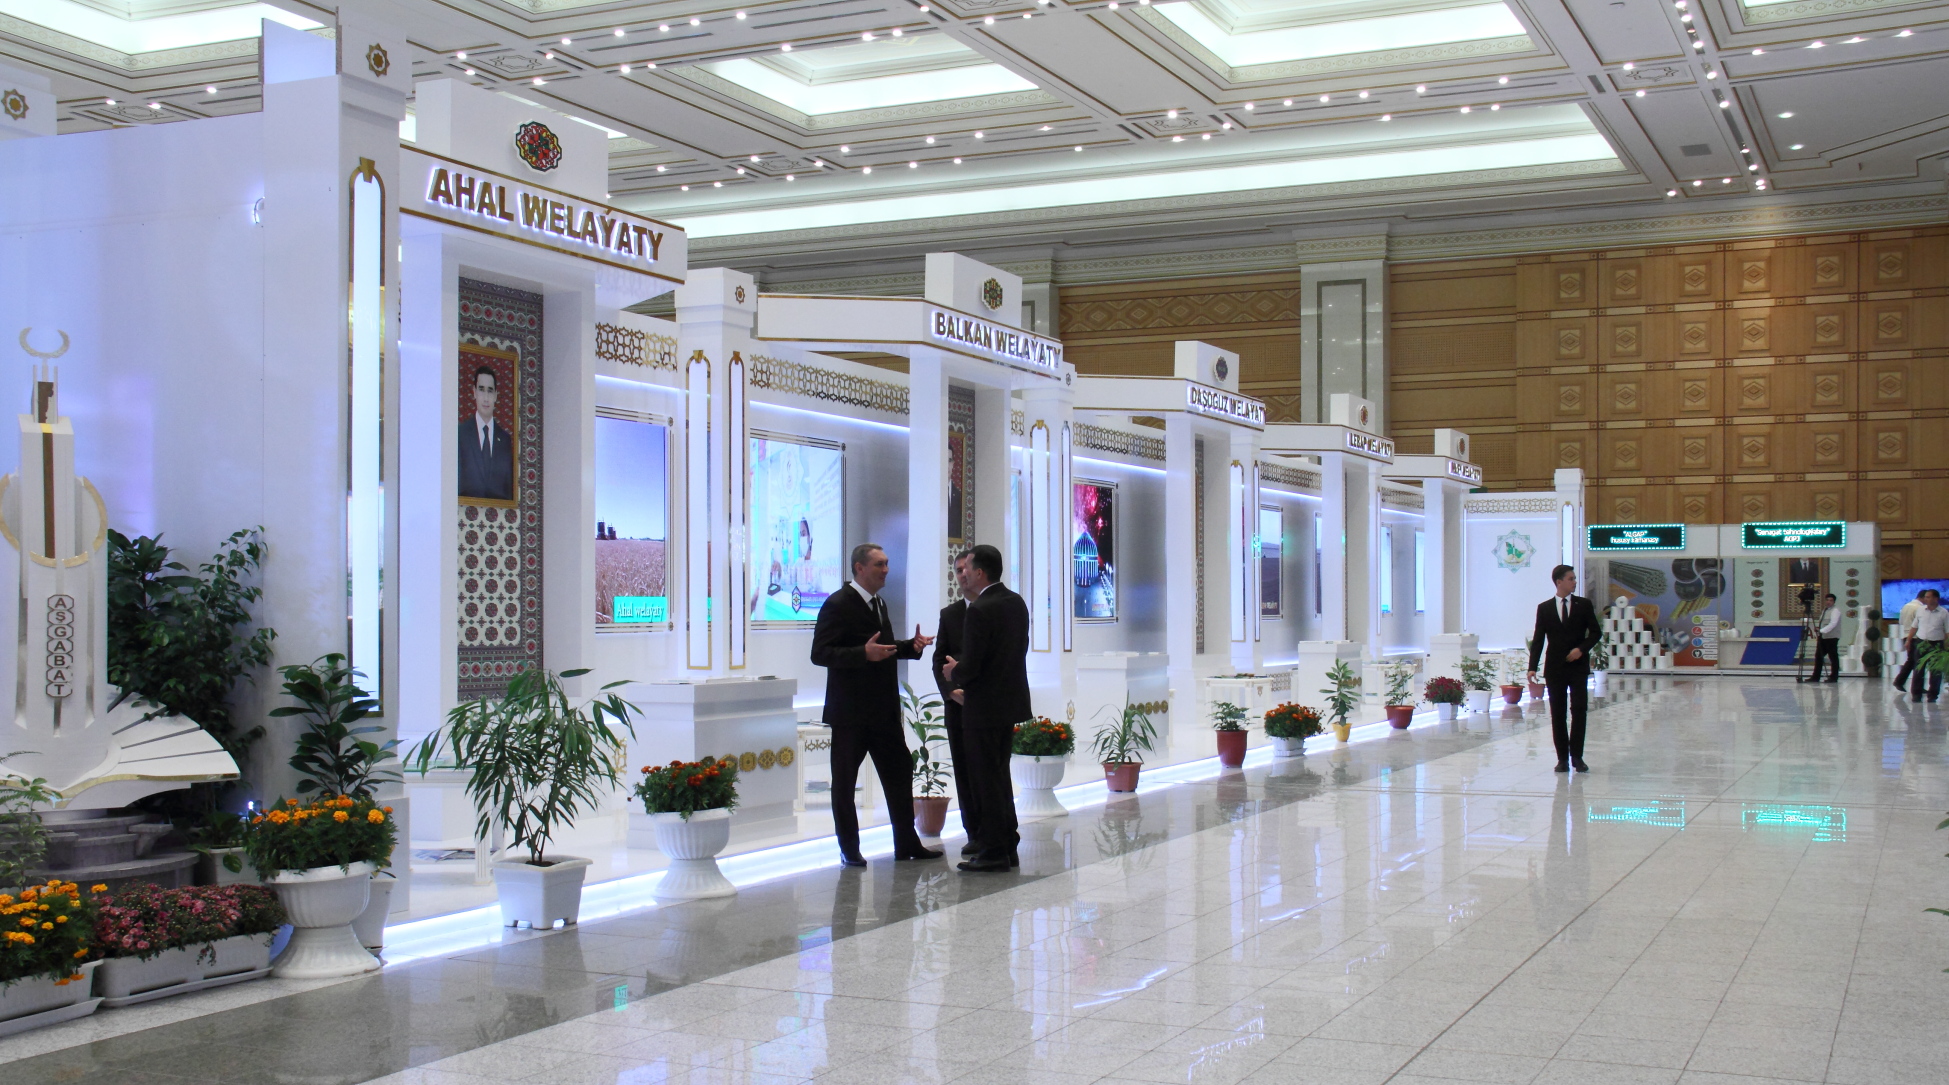 Exhibition of Economic Achievements of Turkmenistan organized in Ashgabat